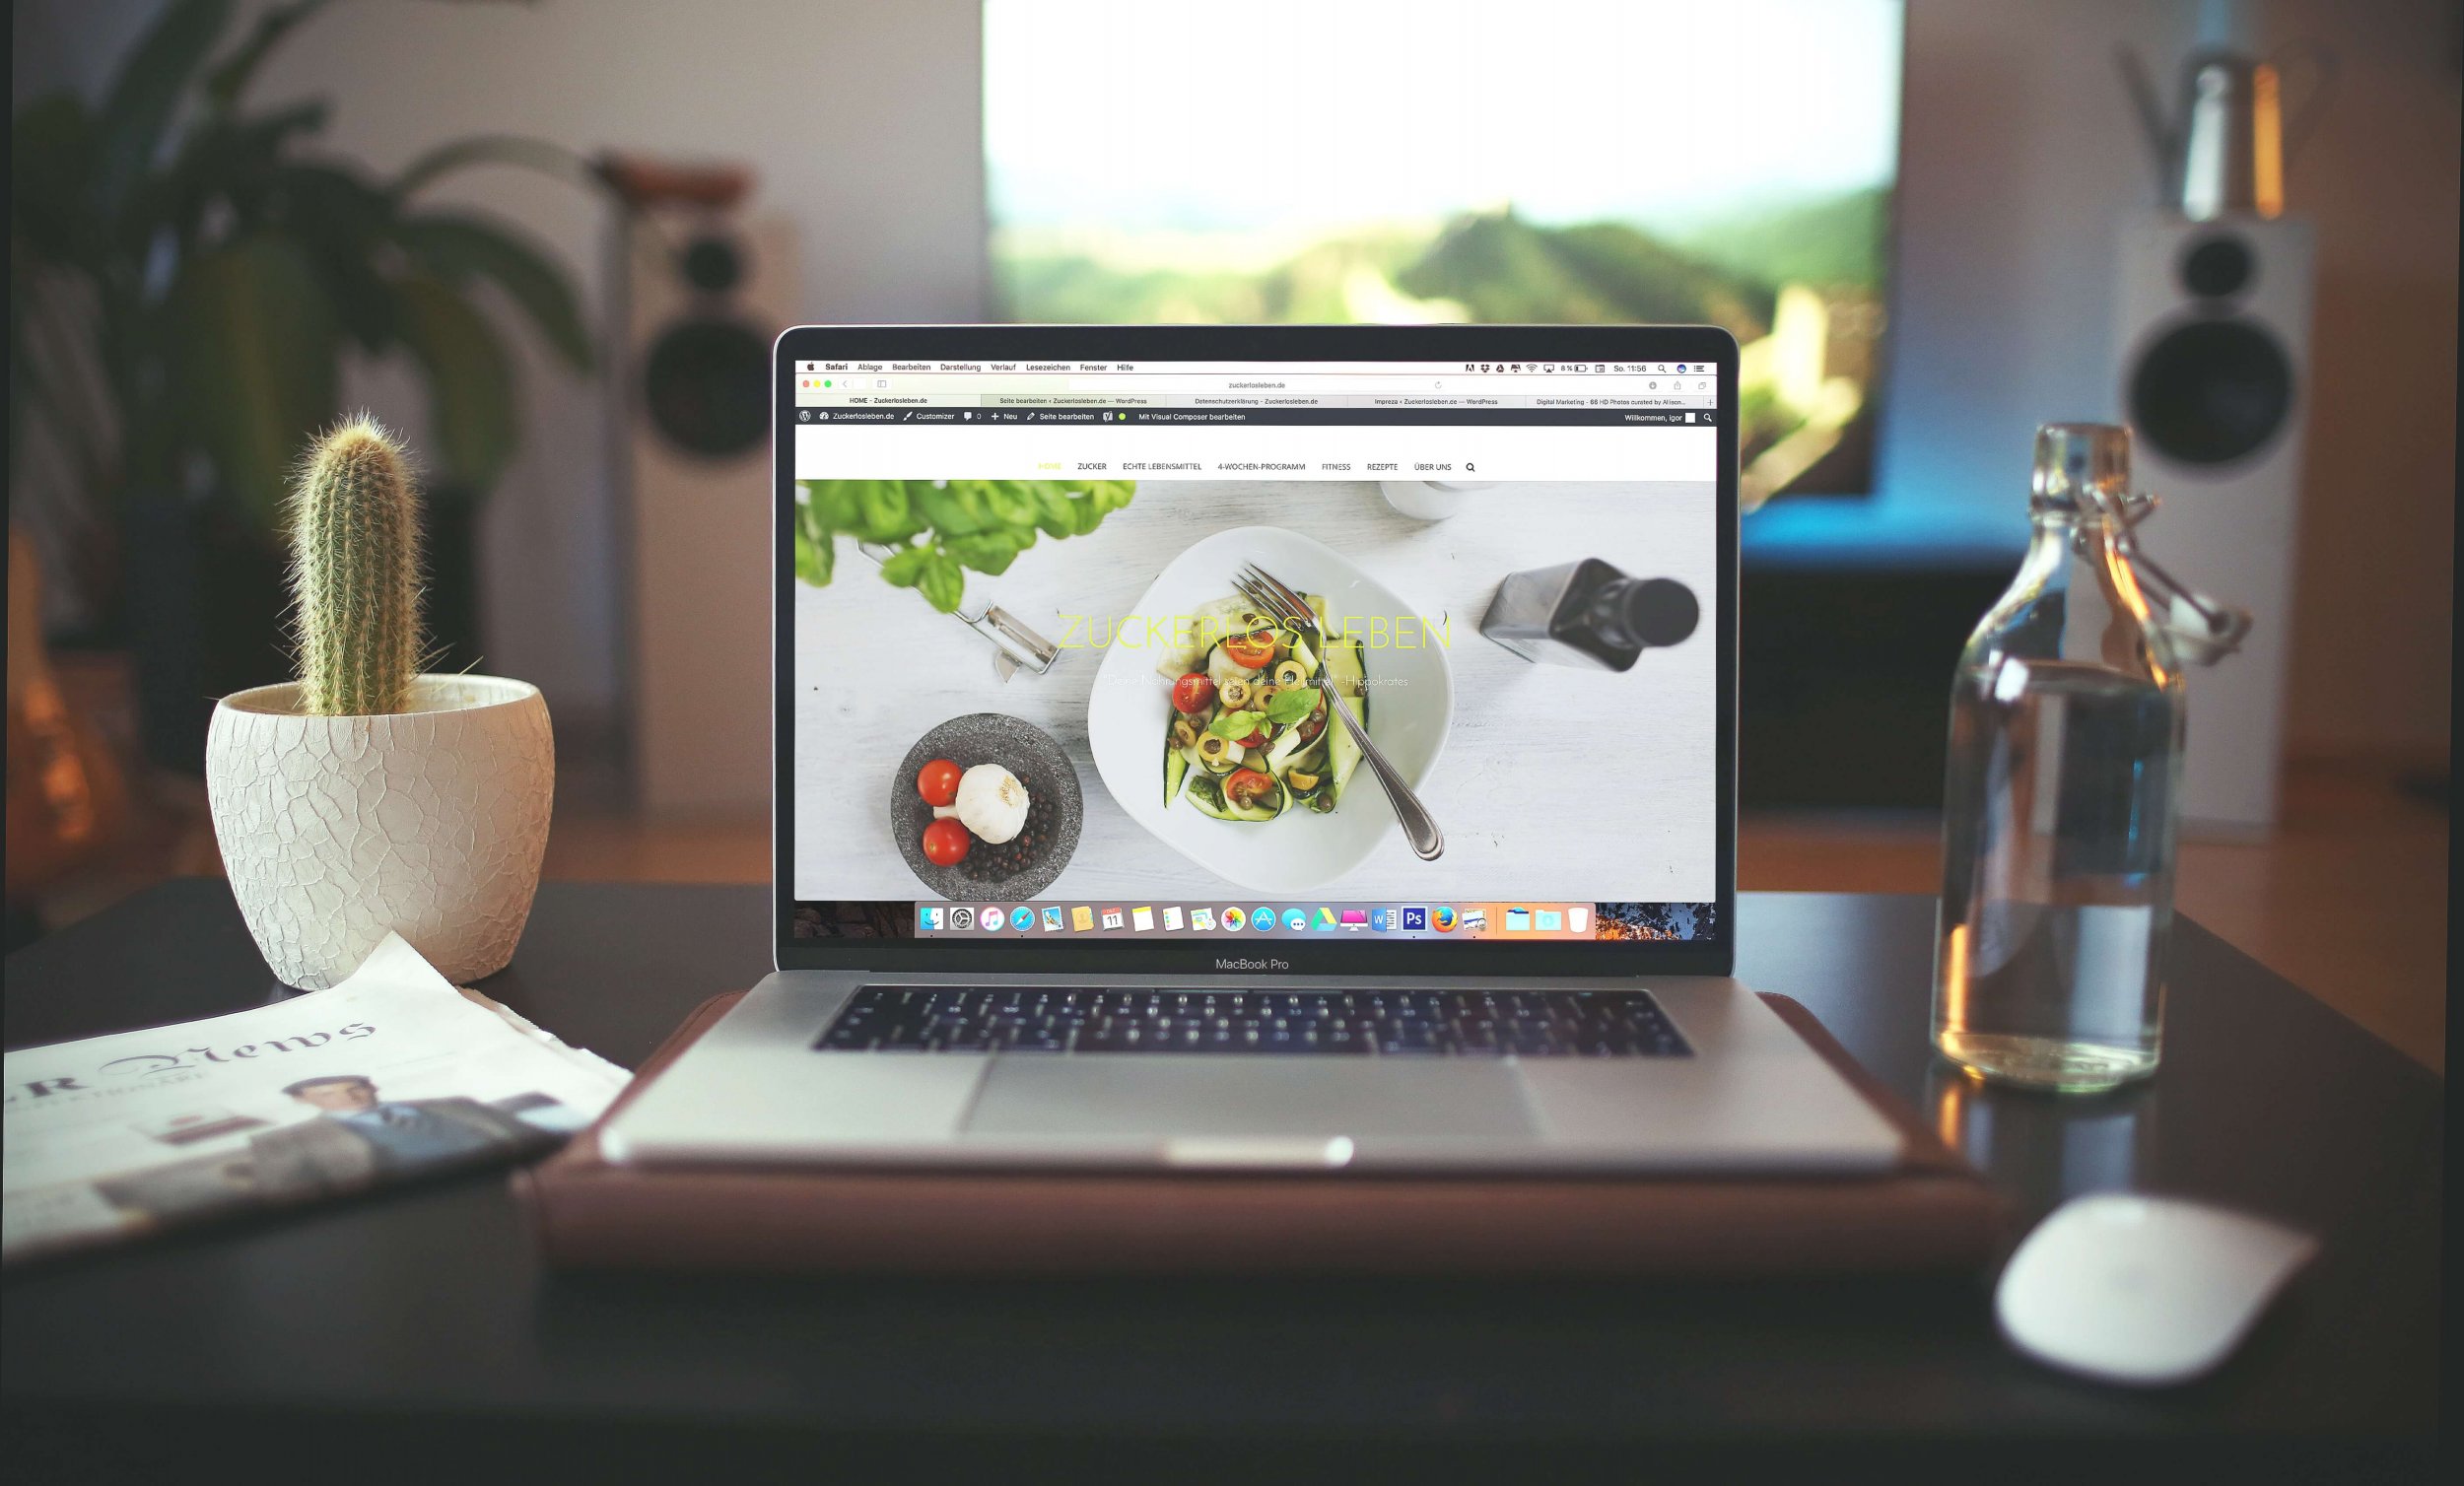 Macbook Pro Showing Vegetable Dish